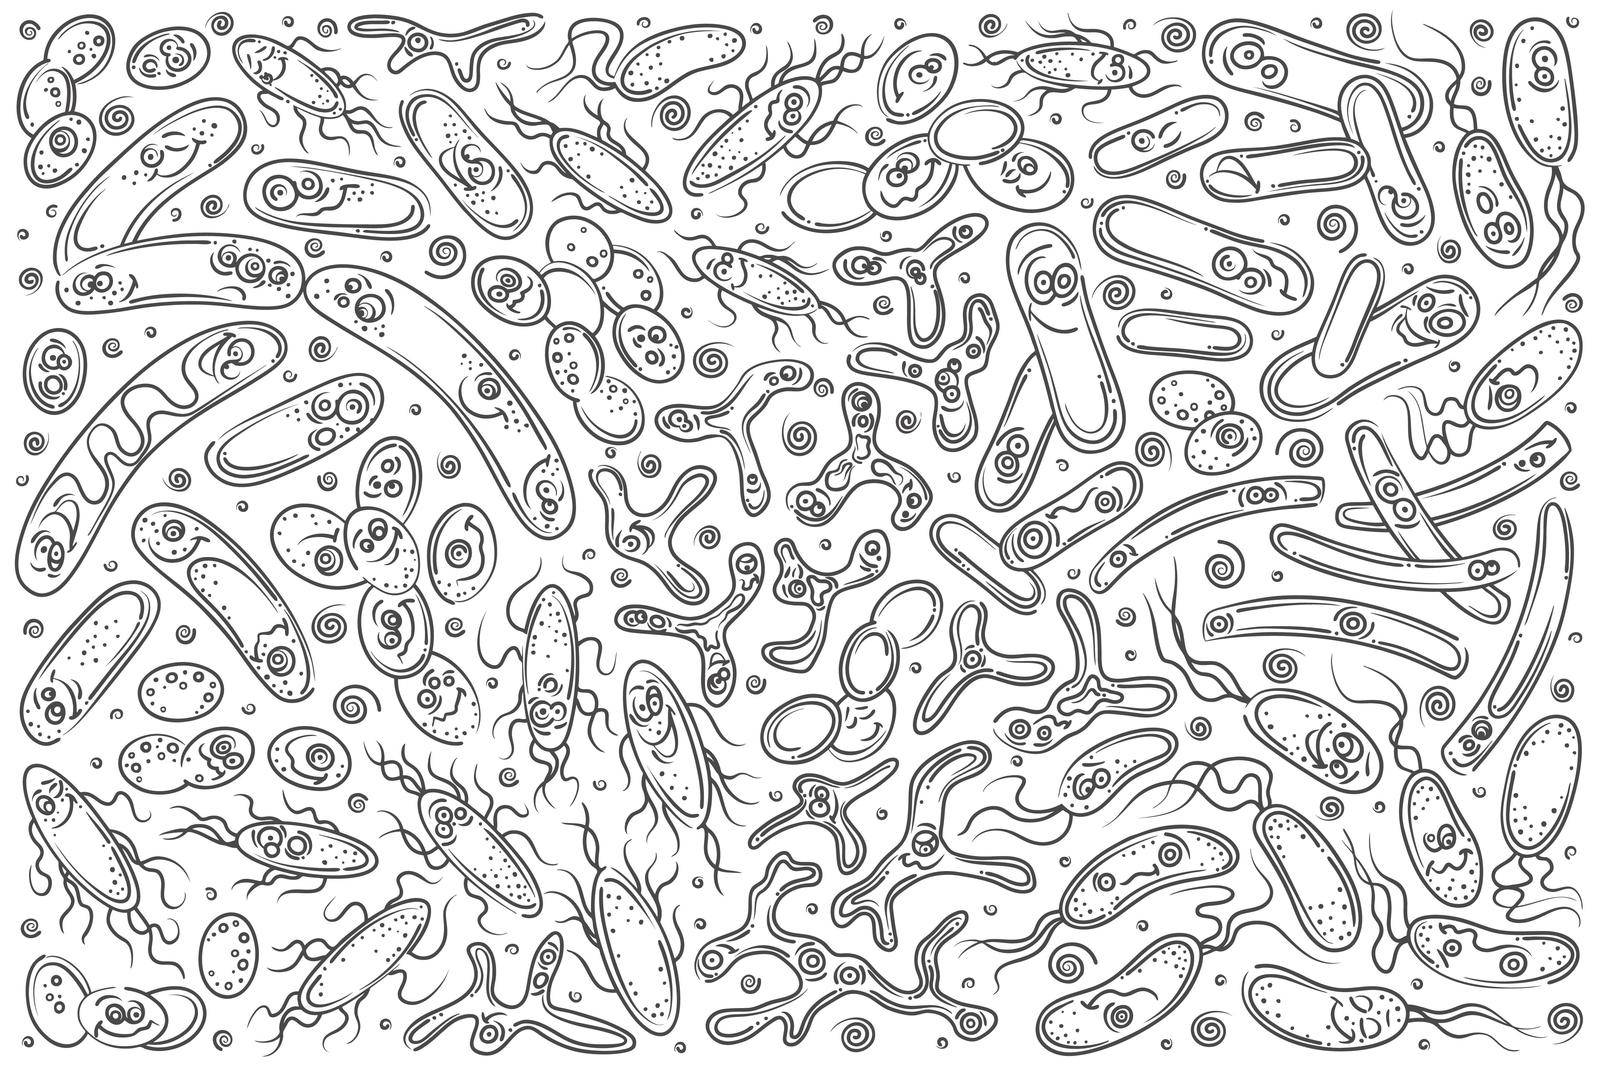 Hand drawn probiotics, useful bacterias. Concept of chemistry, biology and medicine doodle set background